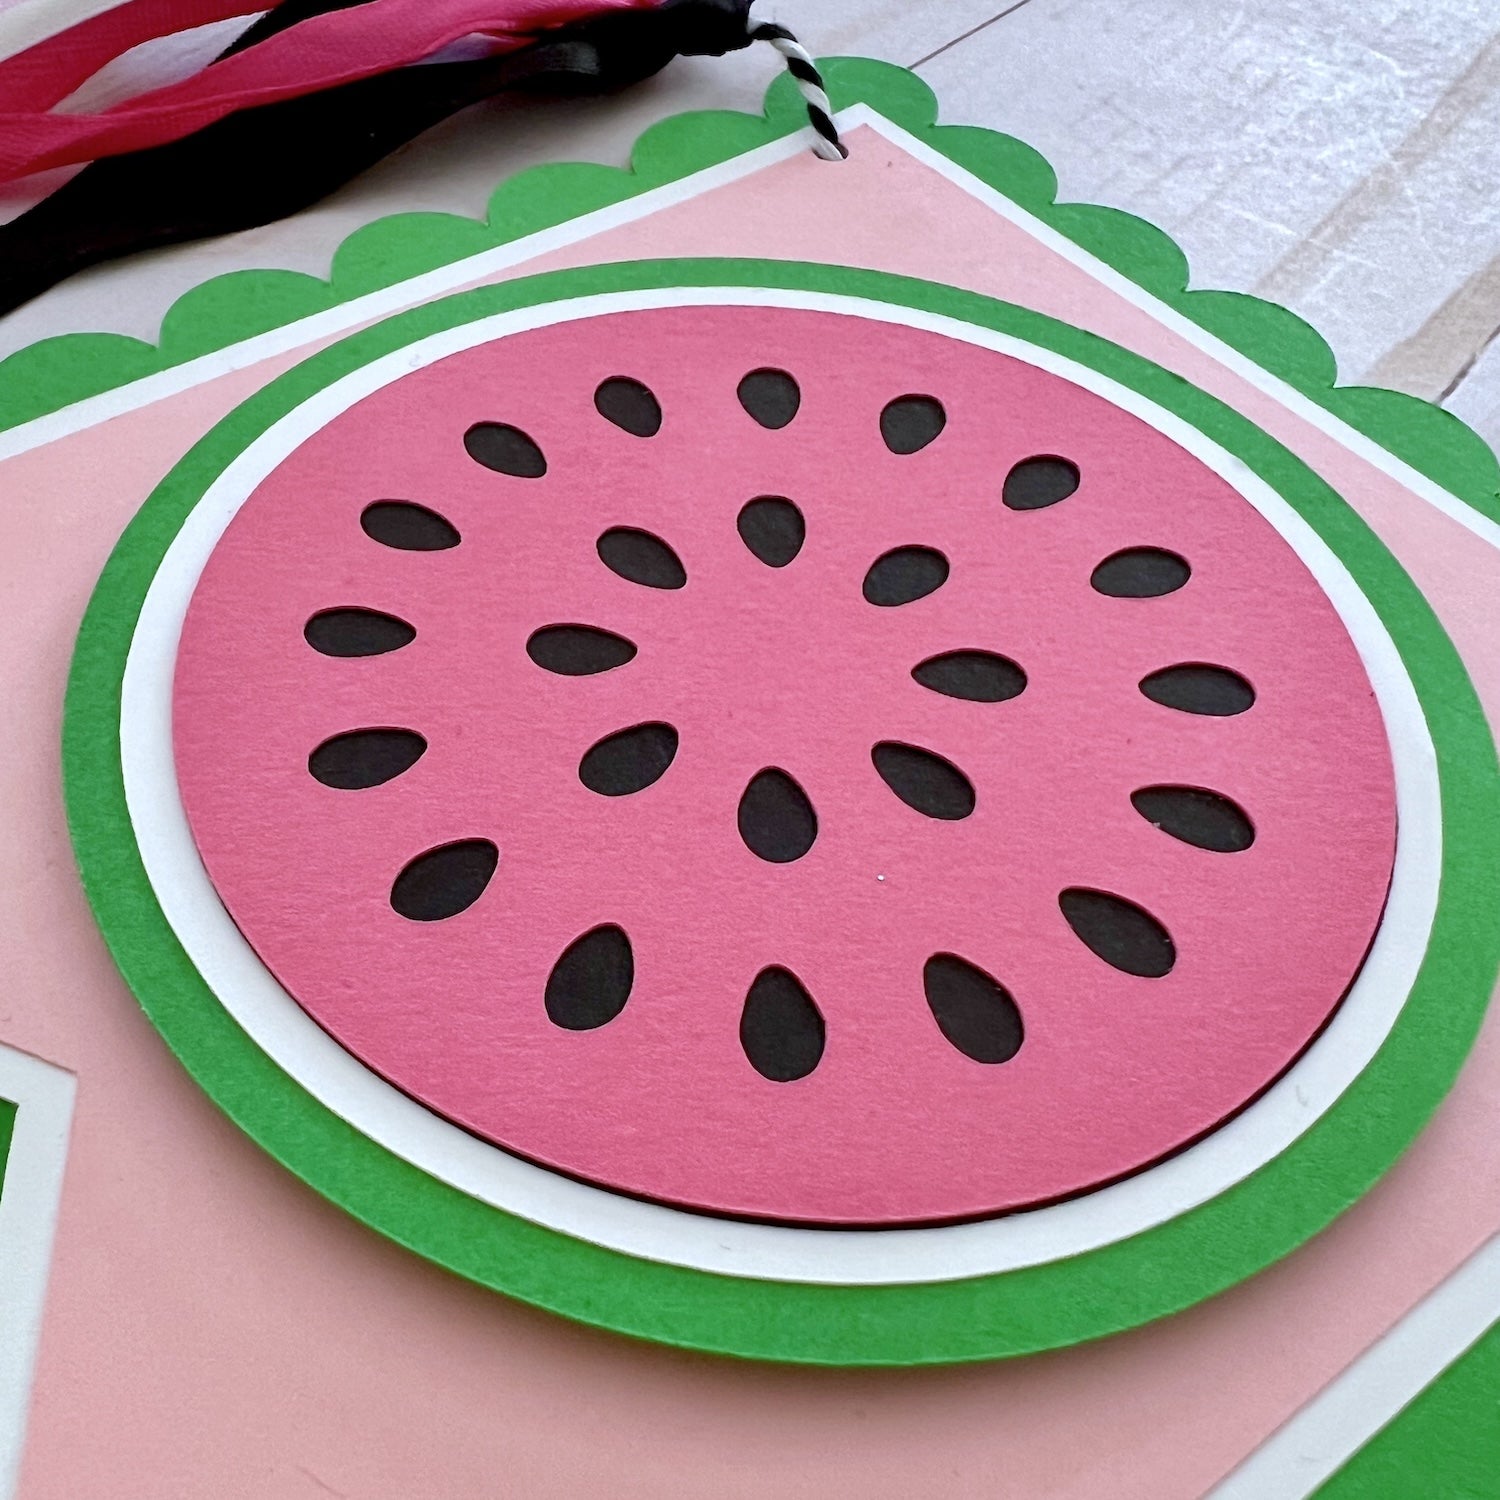 watermelon lessebo closeup